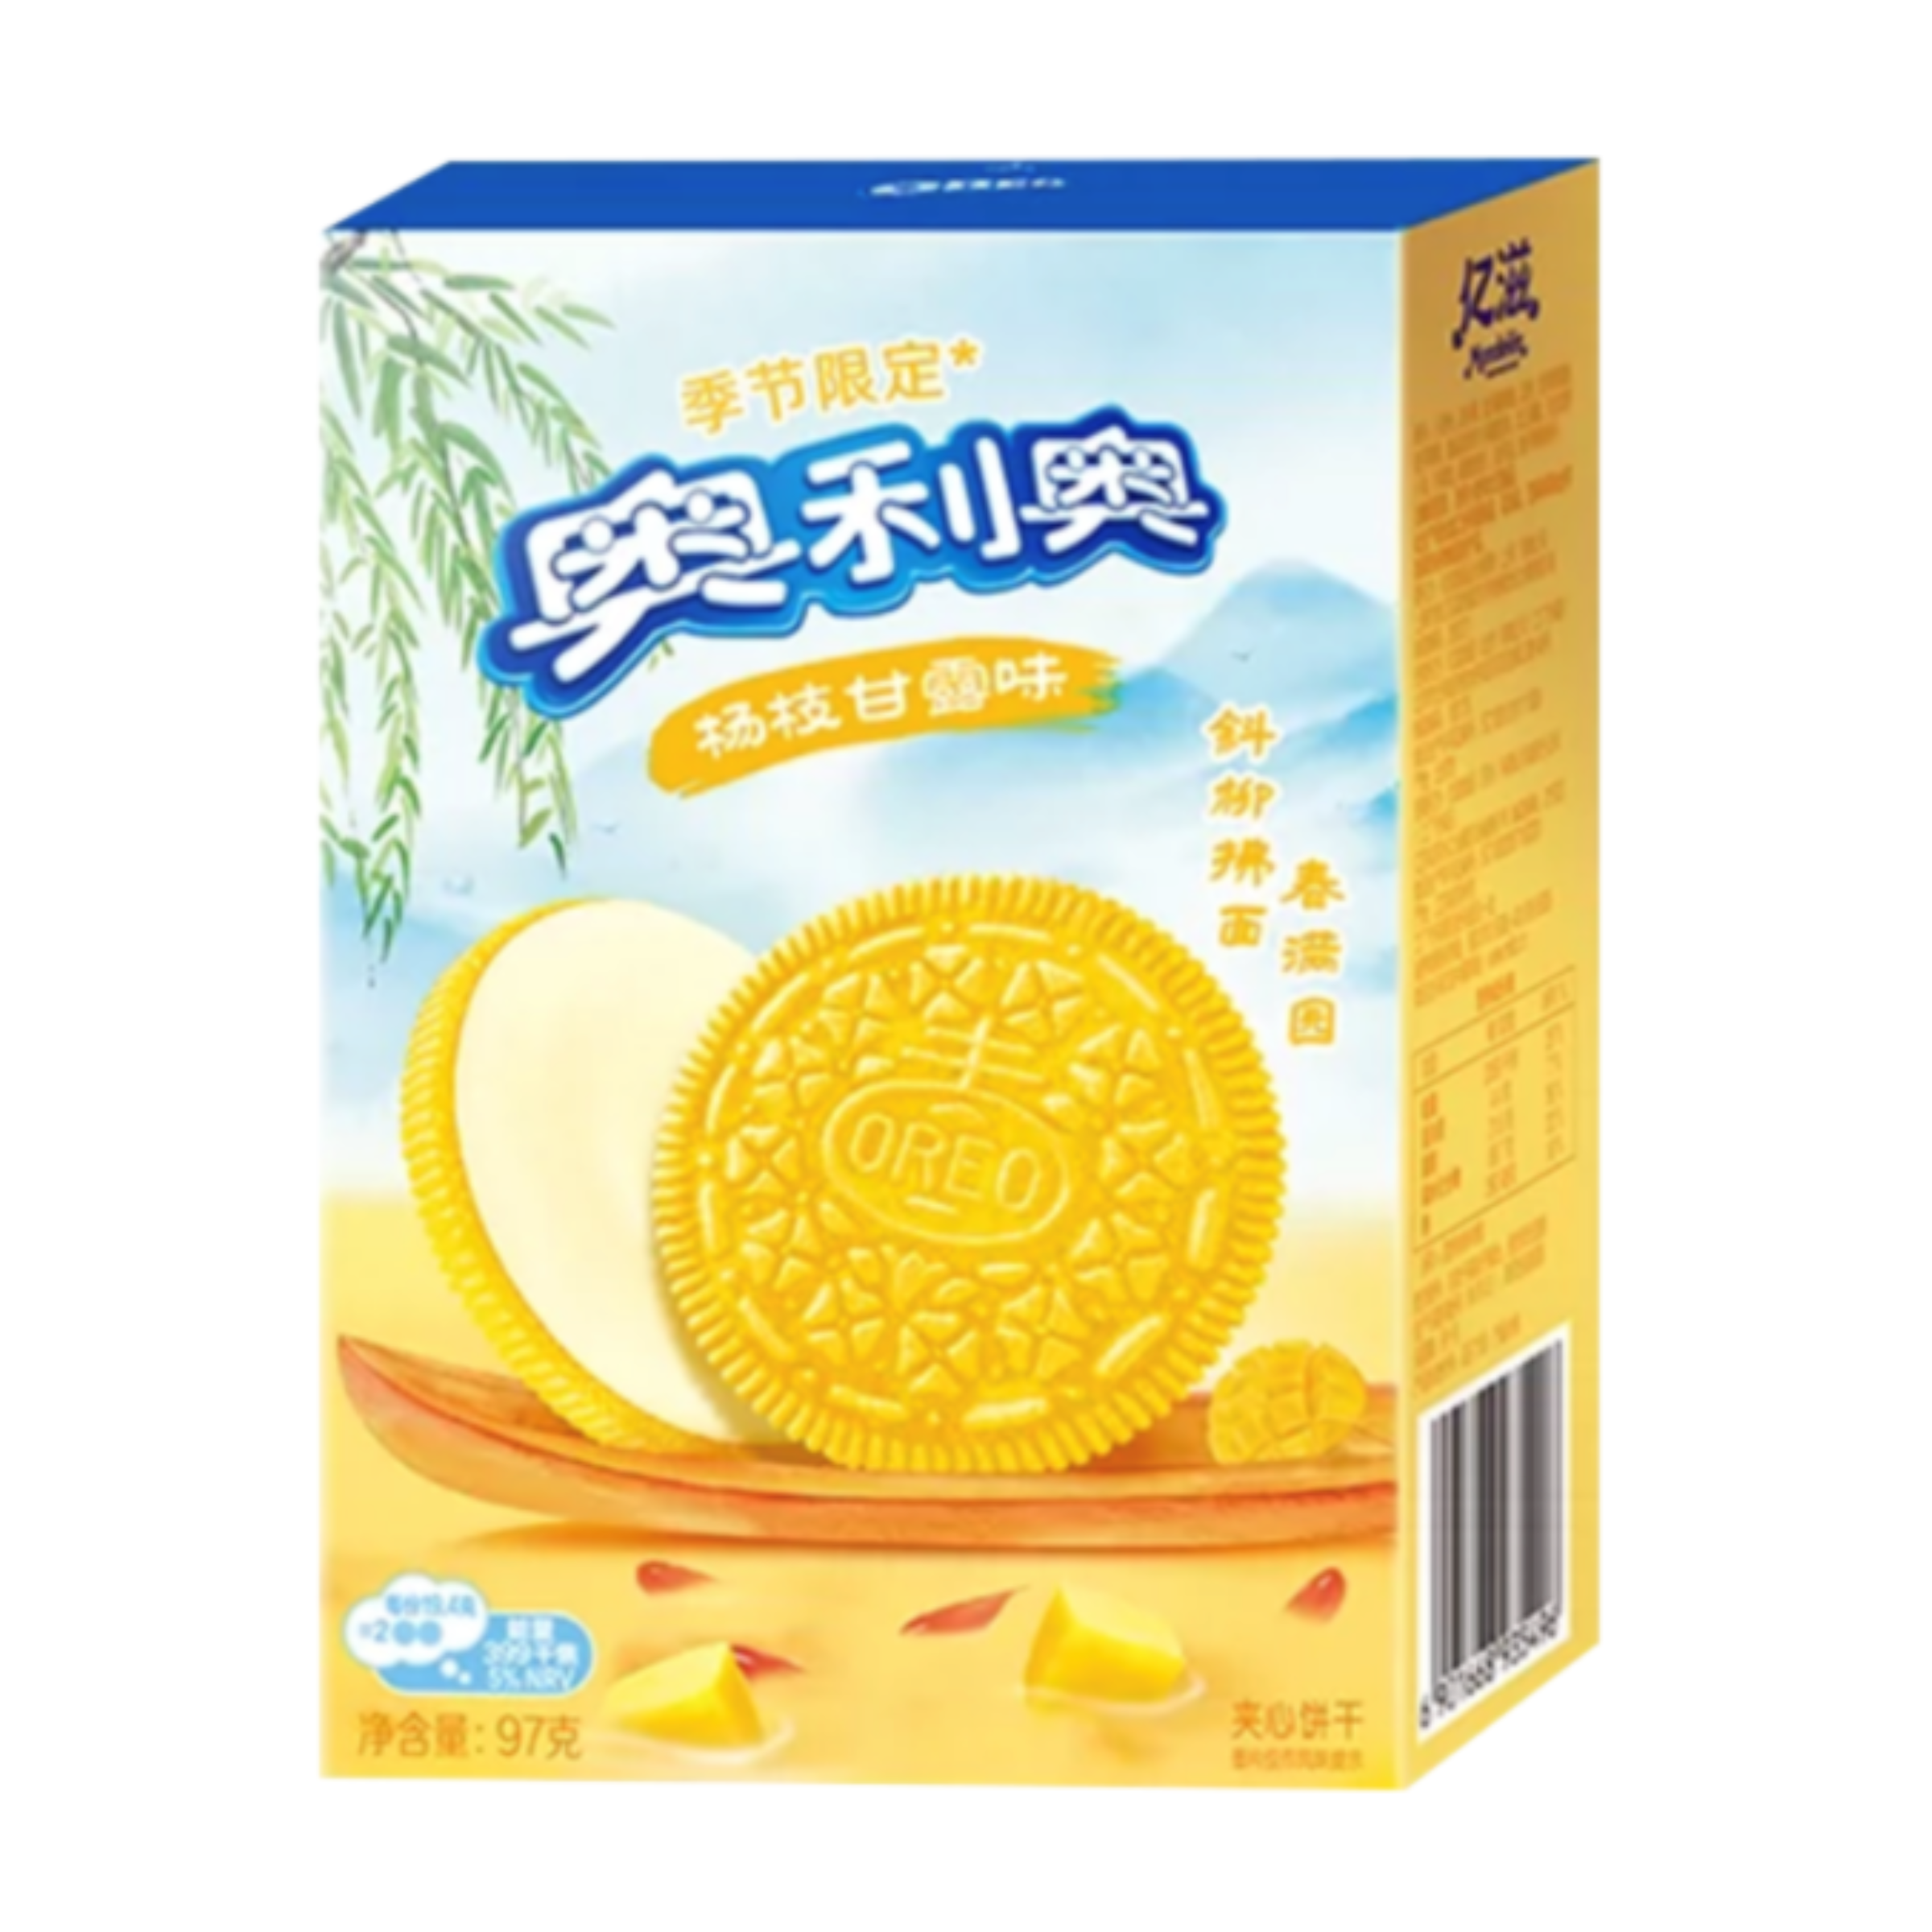 Oreo - Mango Pomelo "Spring Edition" (Asia)